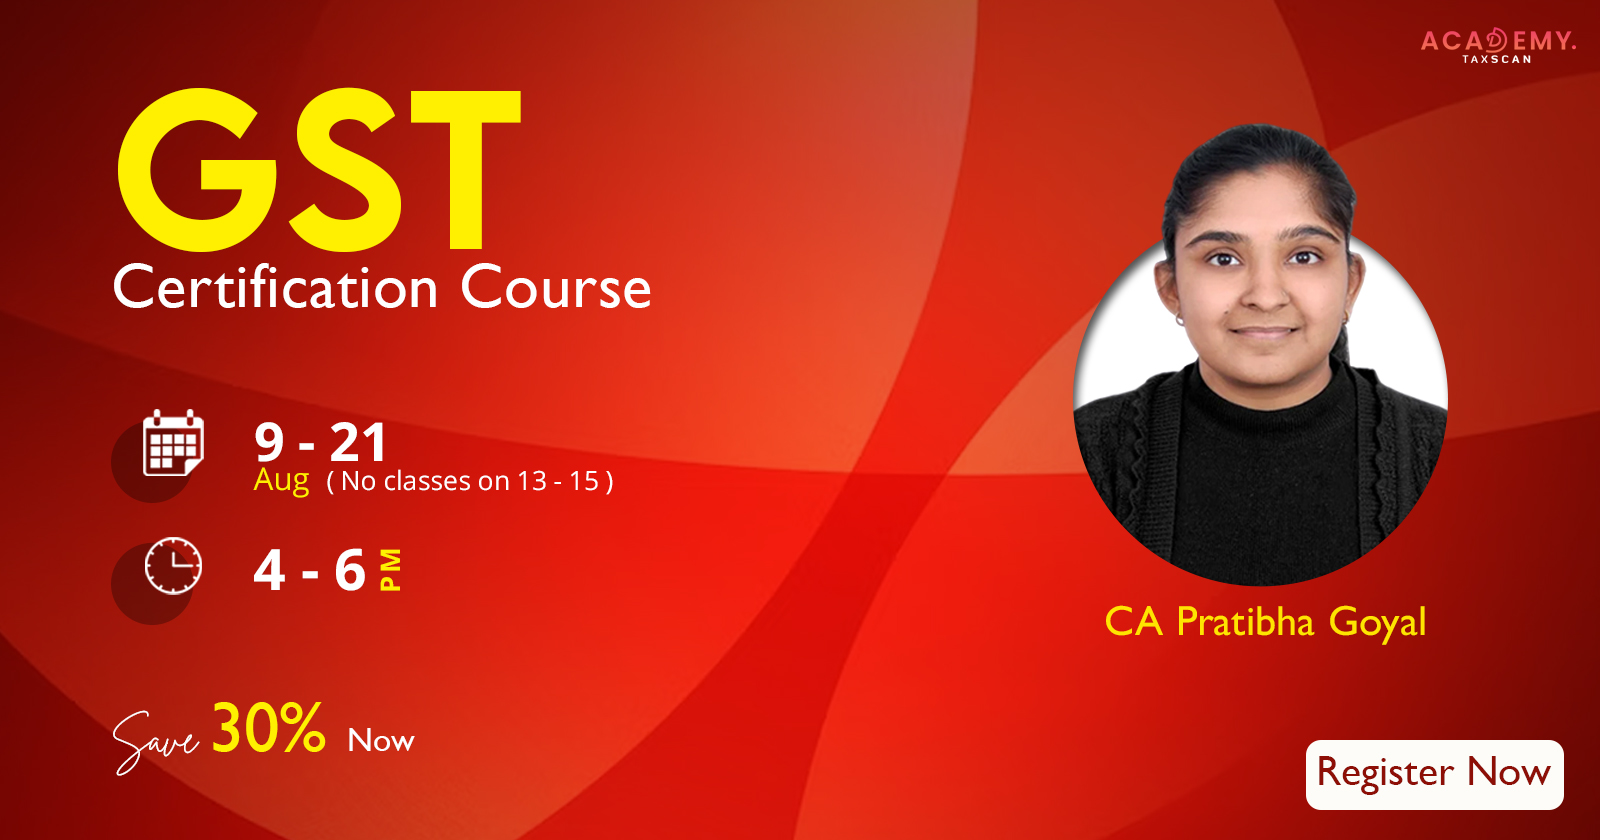 Certification Course - GST - Online Certificate Course - GST Course - Taxscan academy - Online Certificate Course 2023